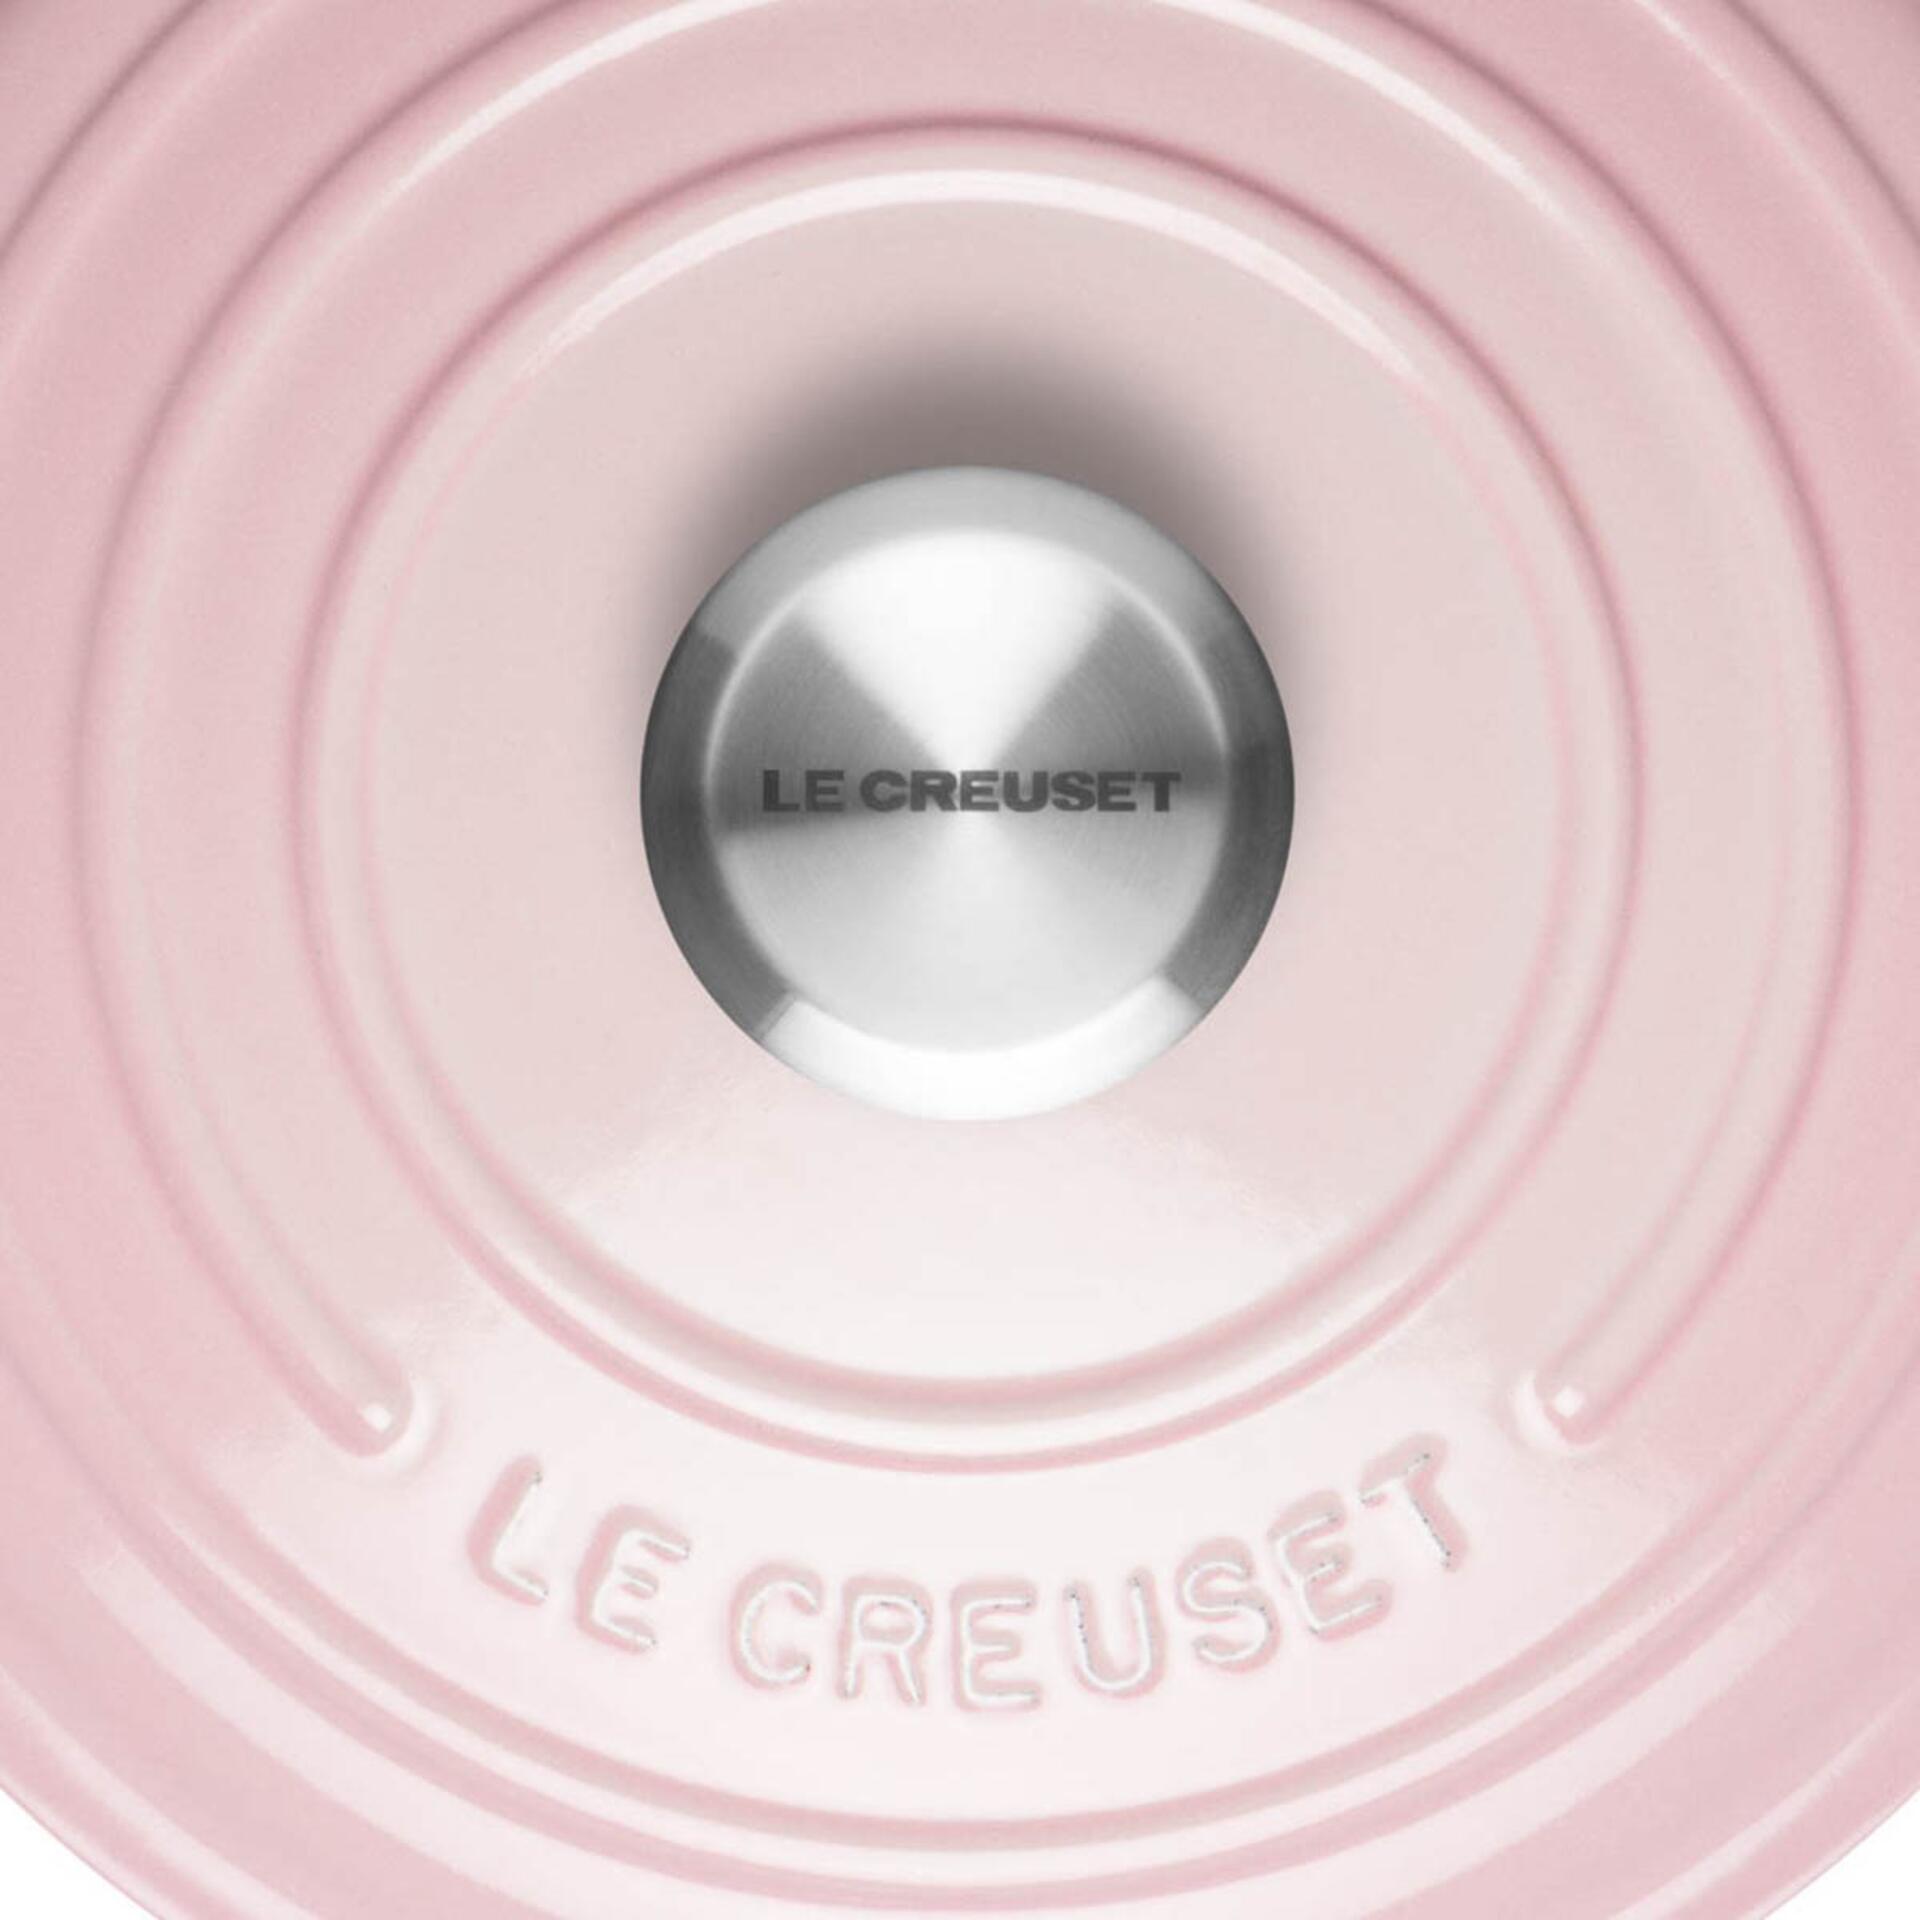 Le Creuset Bräter Signature 24 cm Shell Pink